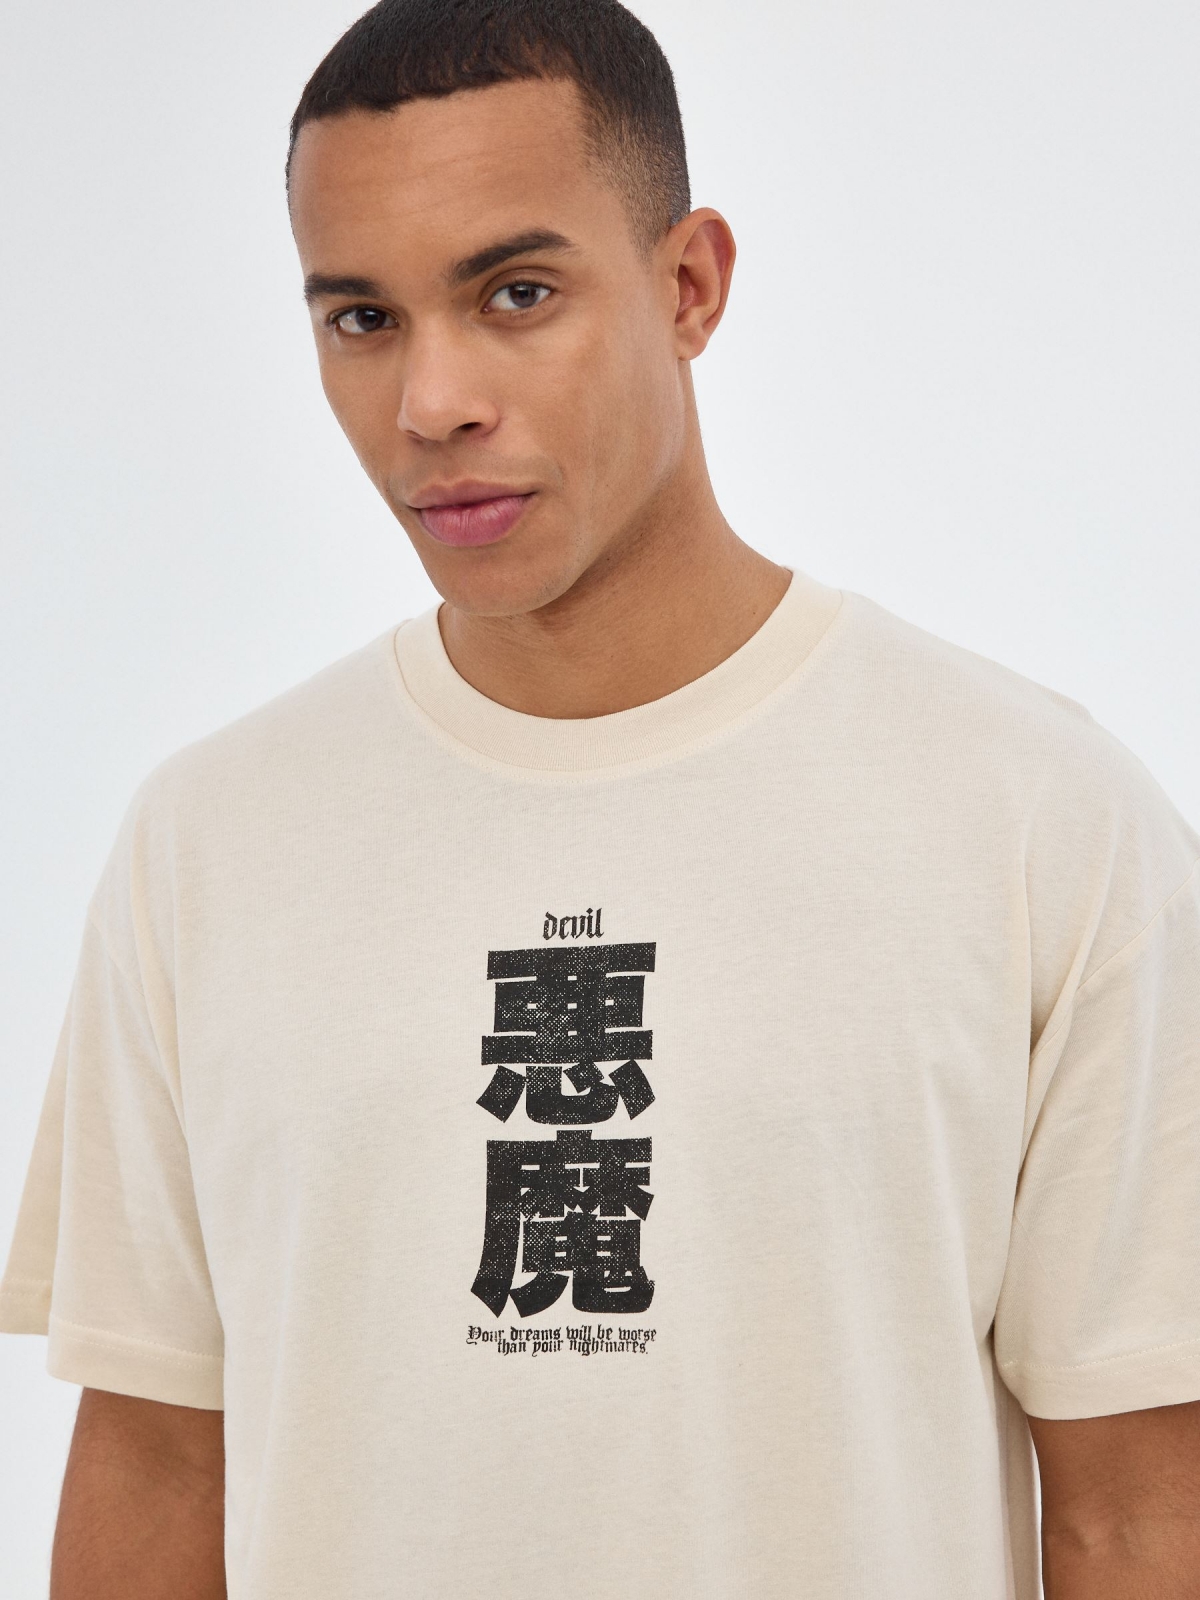 Japanese oversized T-shirt | Men's T-Shirts | INSIDE